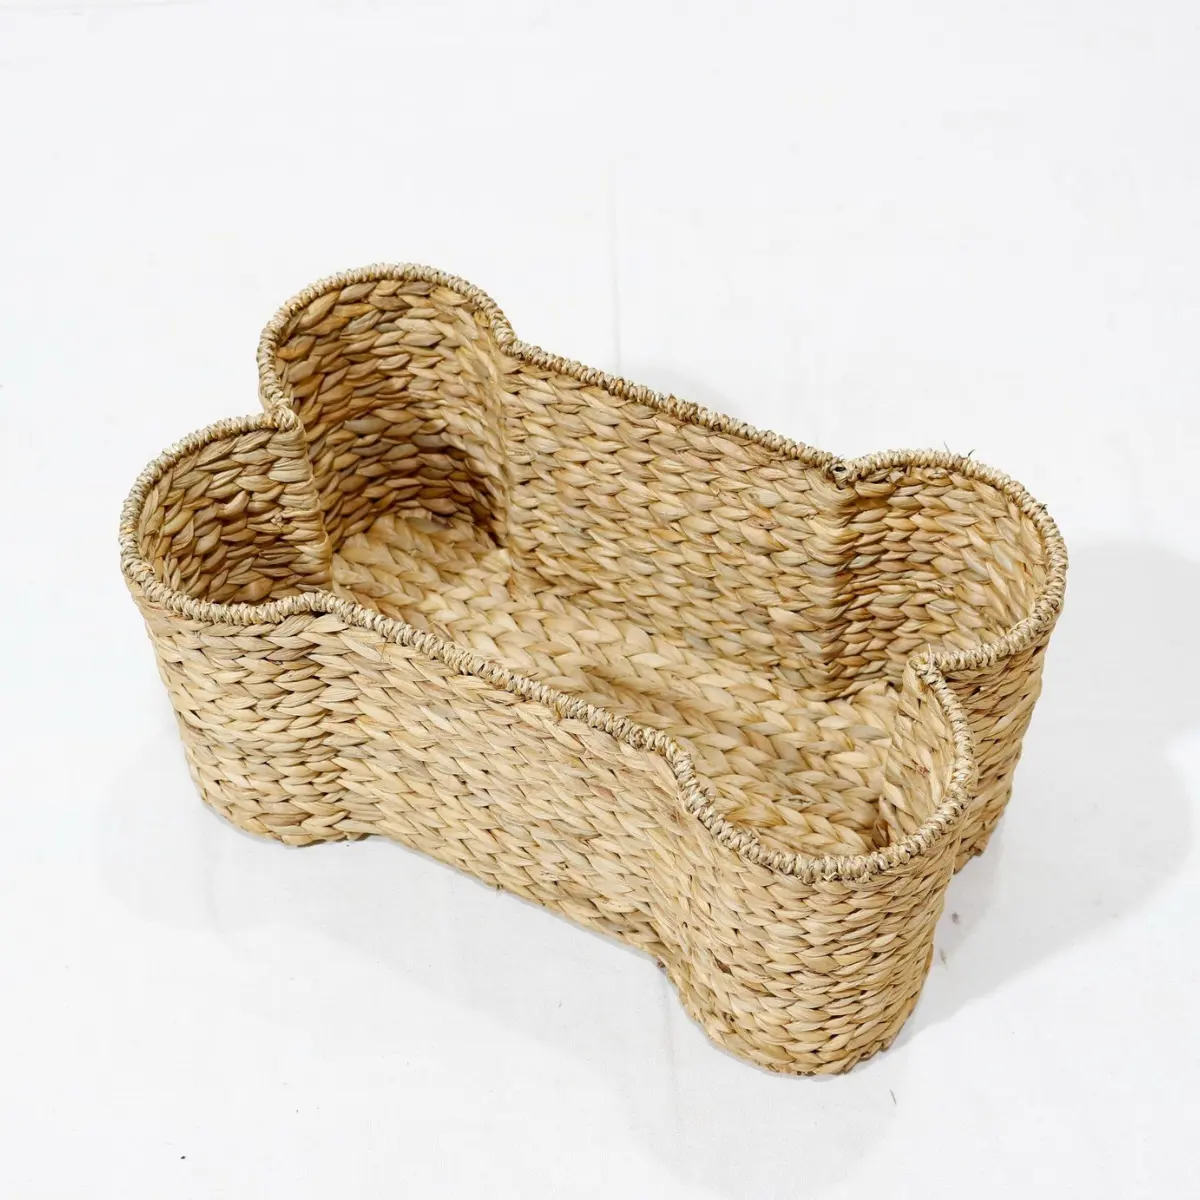 Woven Dog Bone Animal Shaped Basket - Dry Water Hyacinth Storage Wicker Baskets for Organizing and Pet Bedding